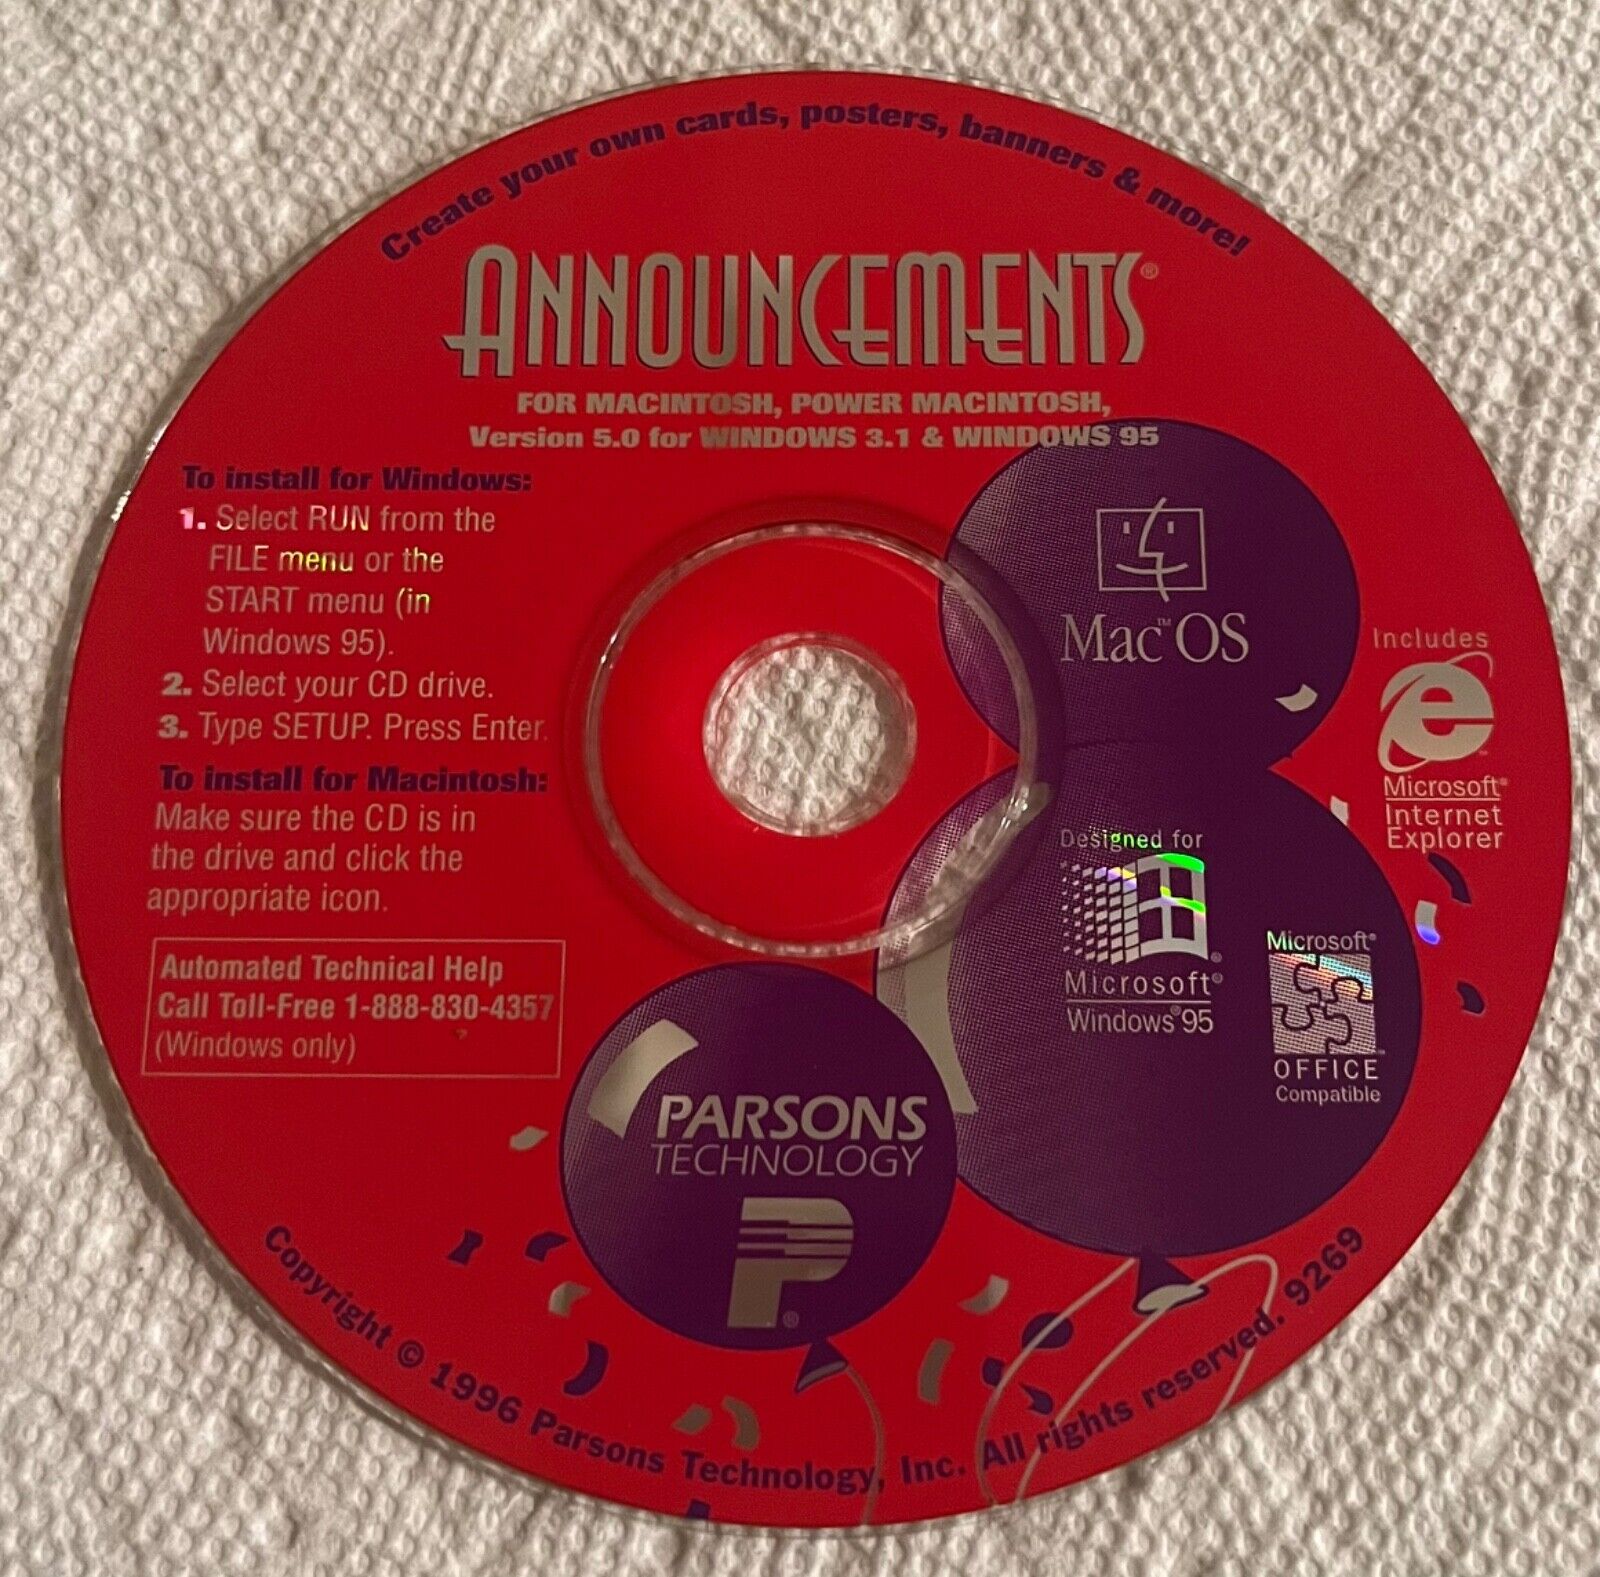 1996 Parsons Technology Announcements 5.0 CD for Mac, Windows 3.1 & 95 Vintage